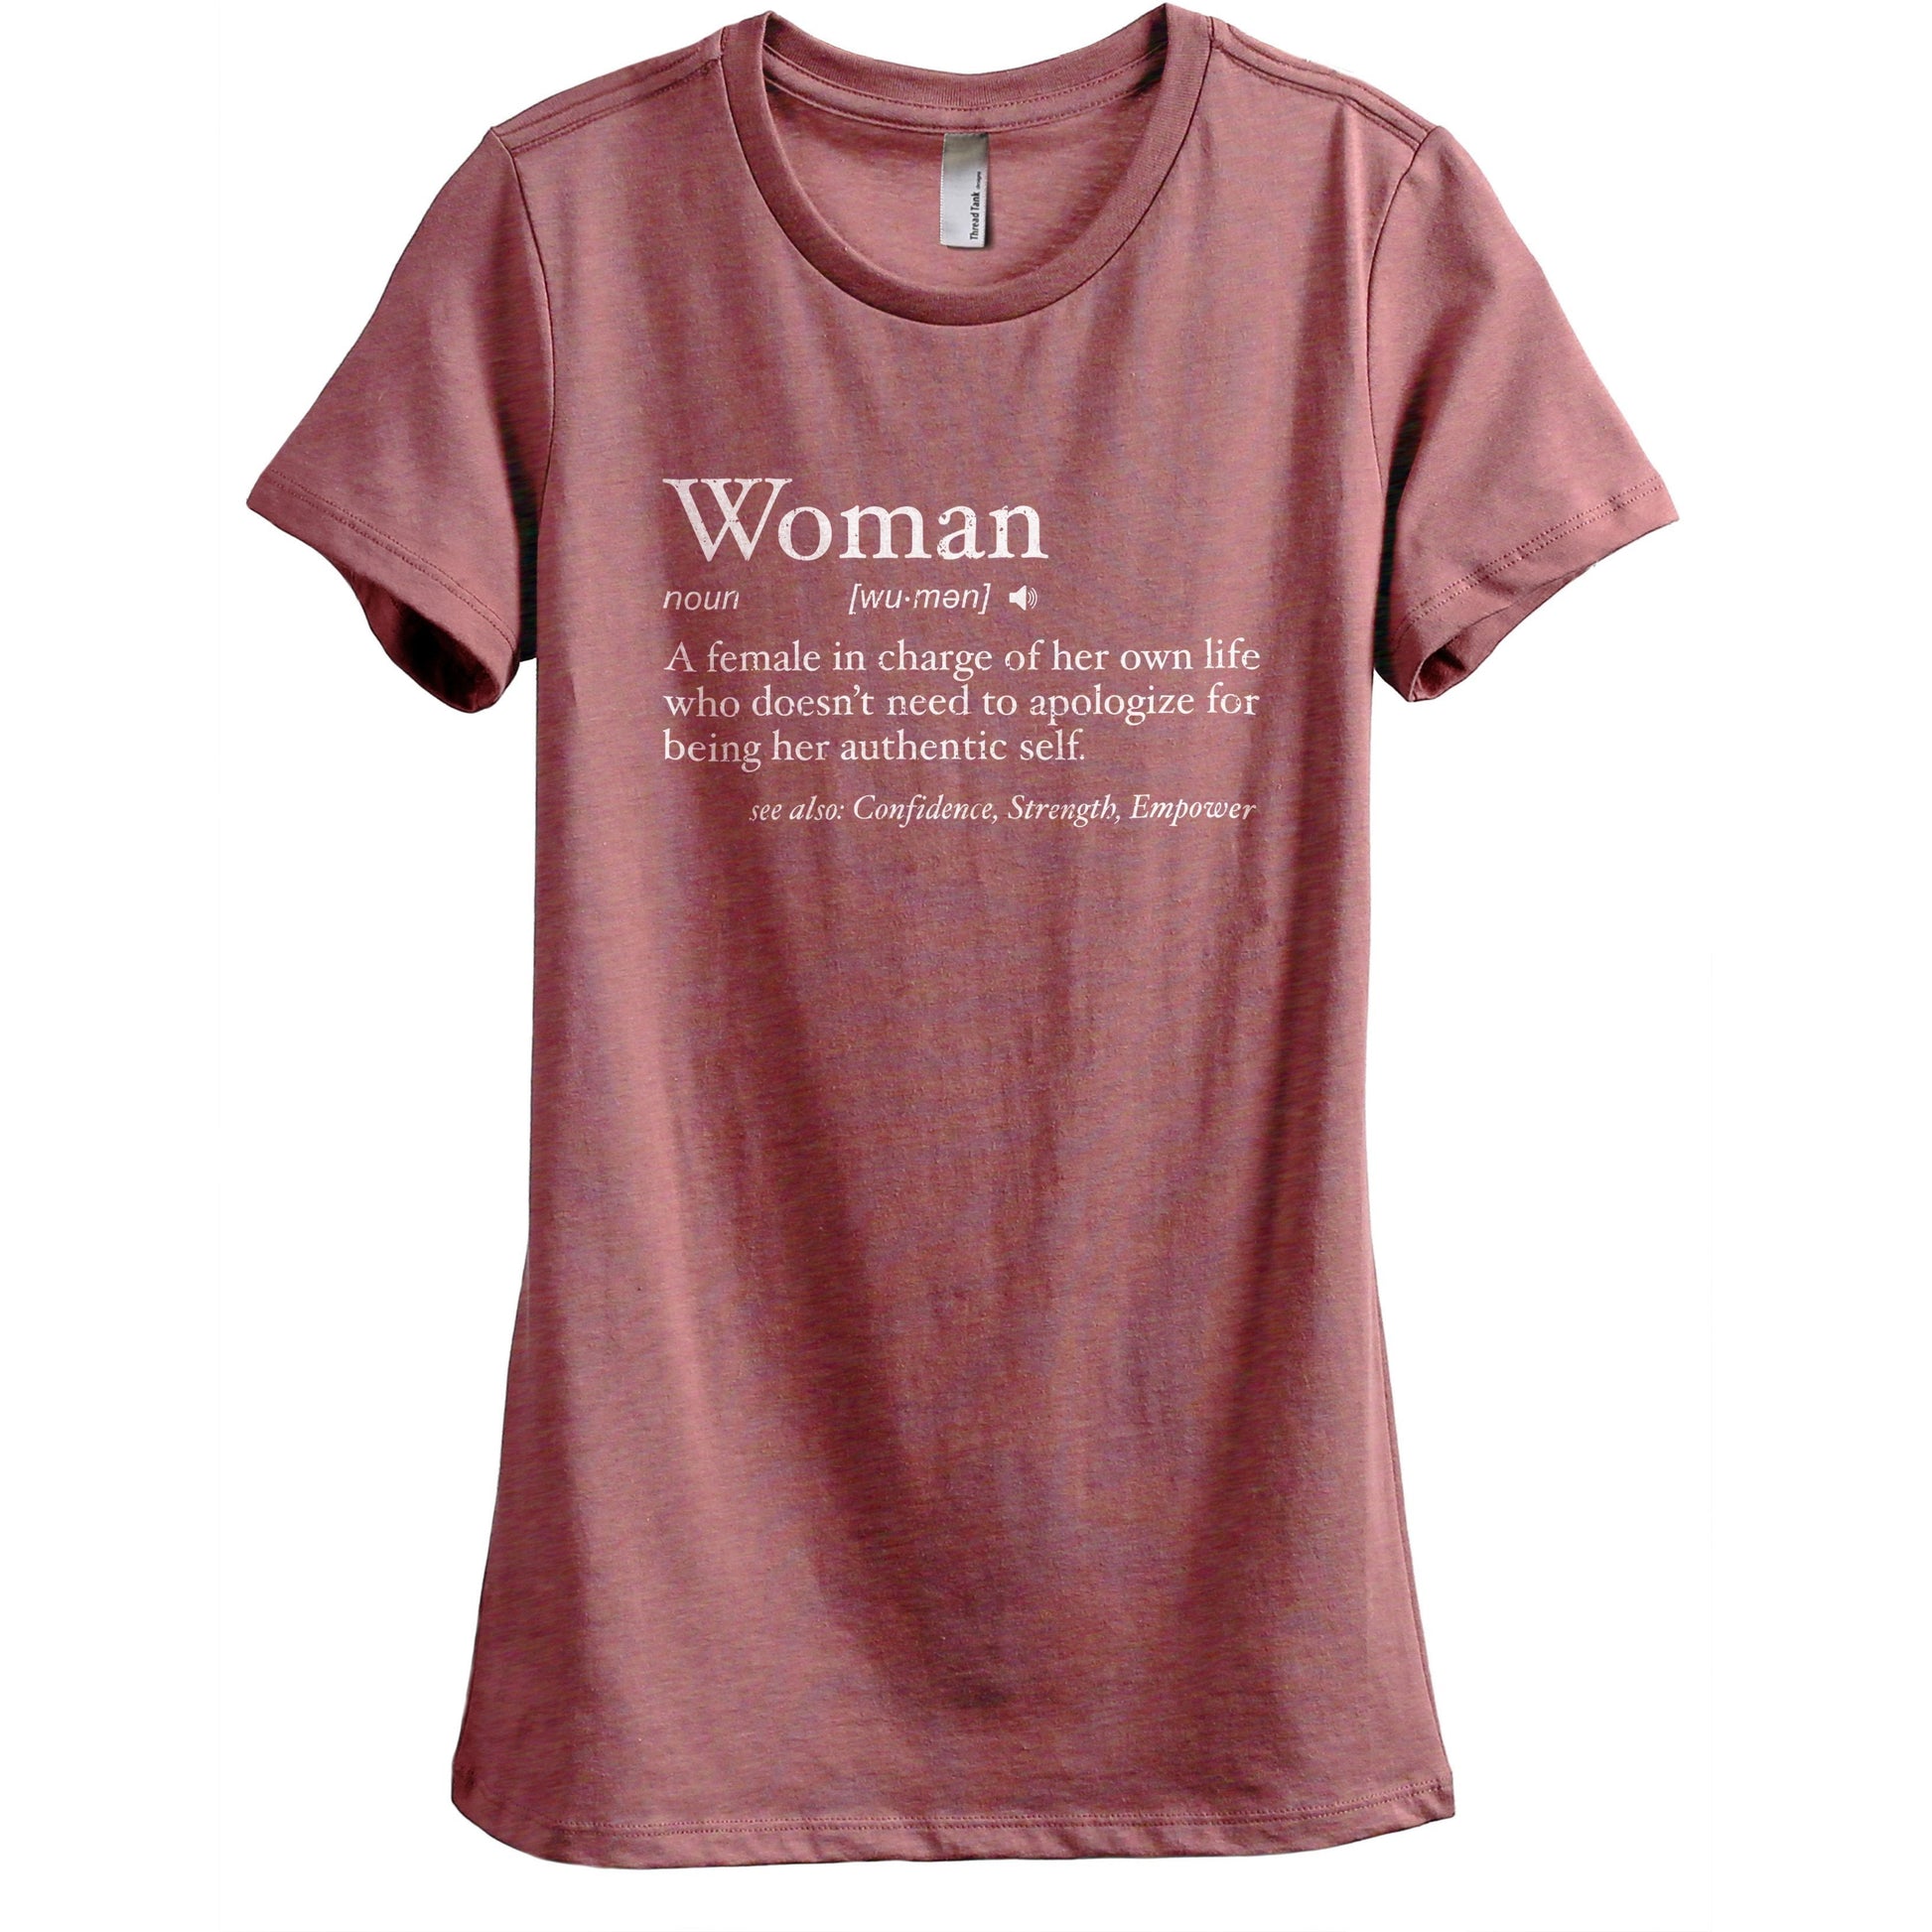 Fierce Definition Women's T-Shirt